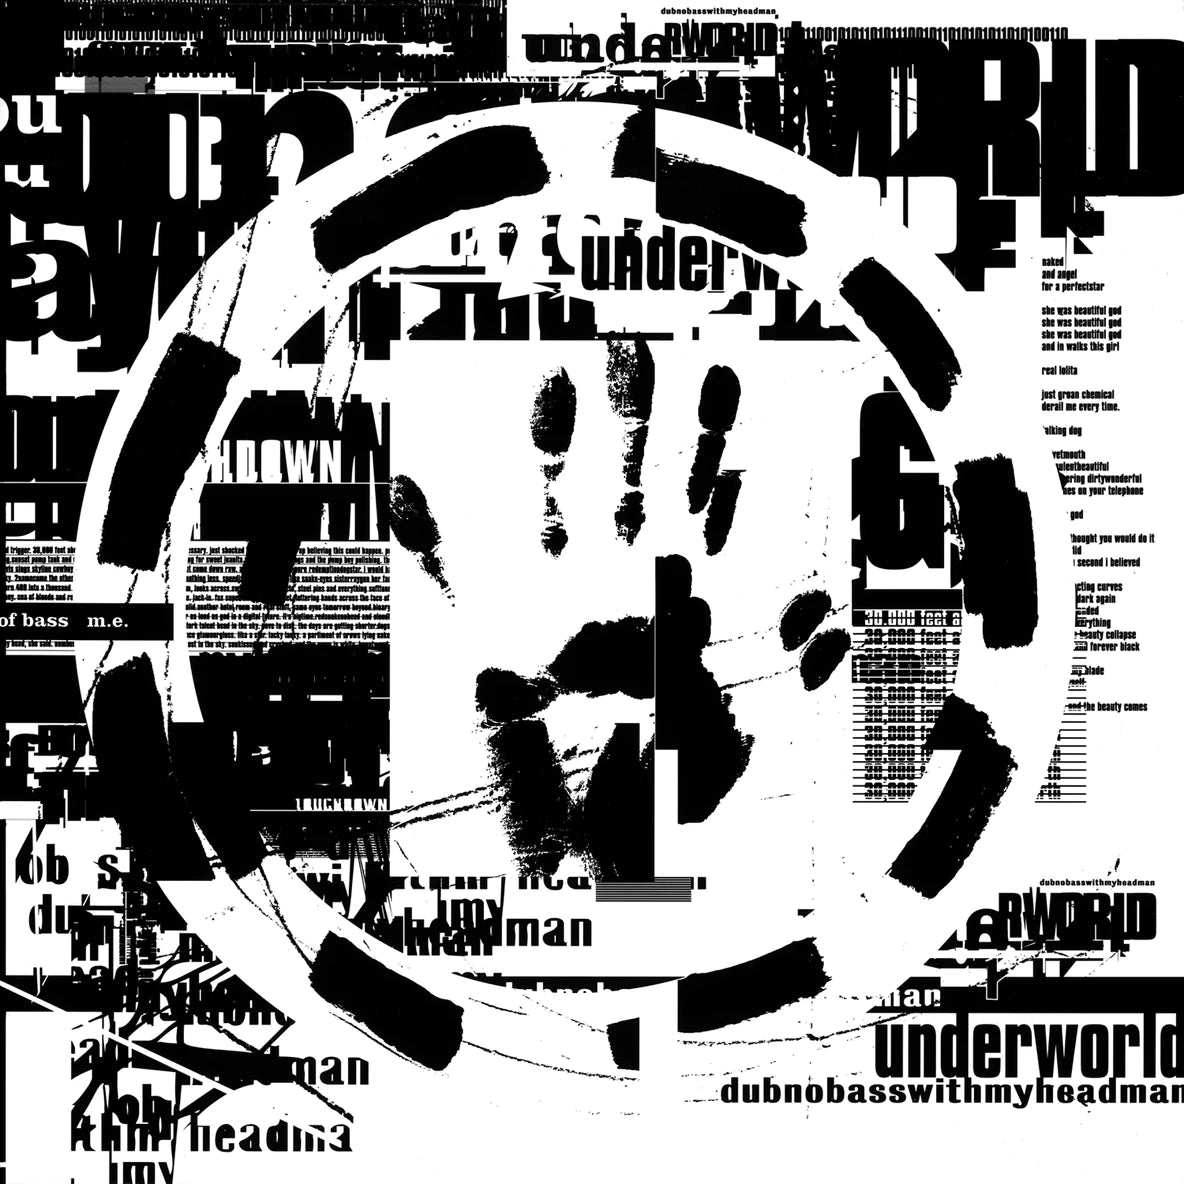 Underworld - Dubnobass... CD (1994)